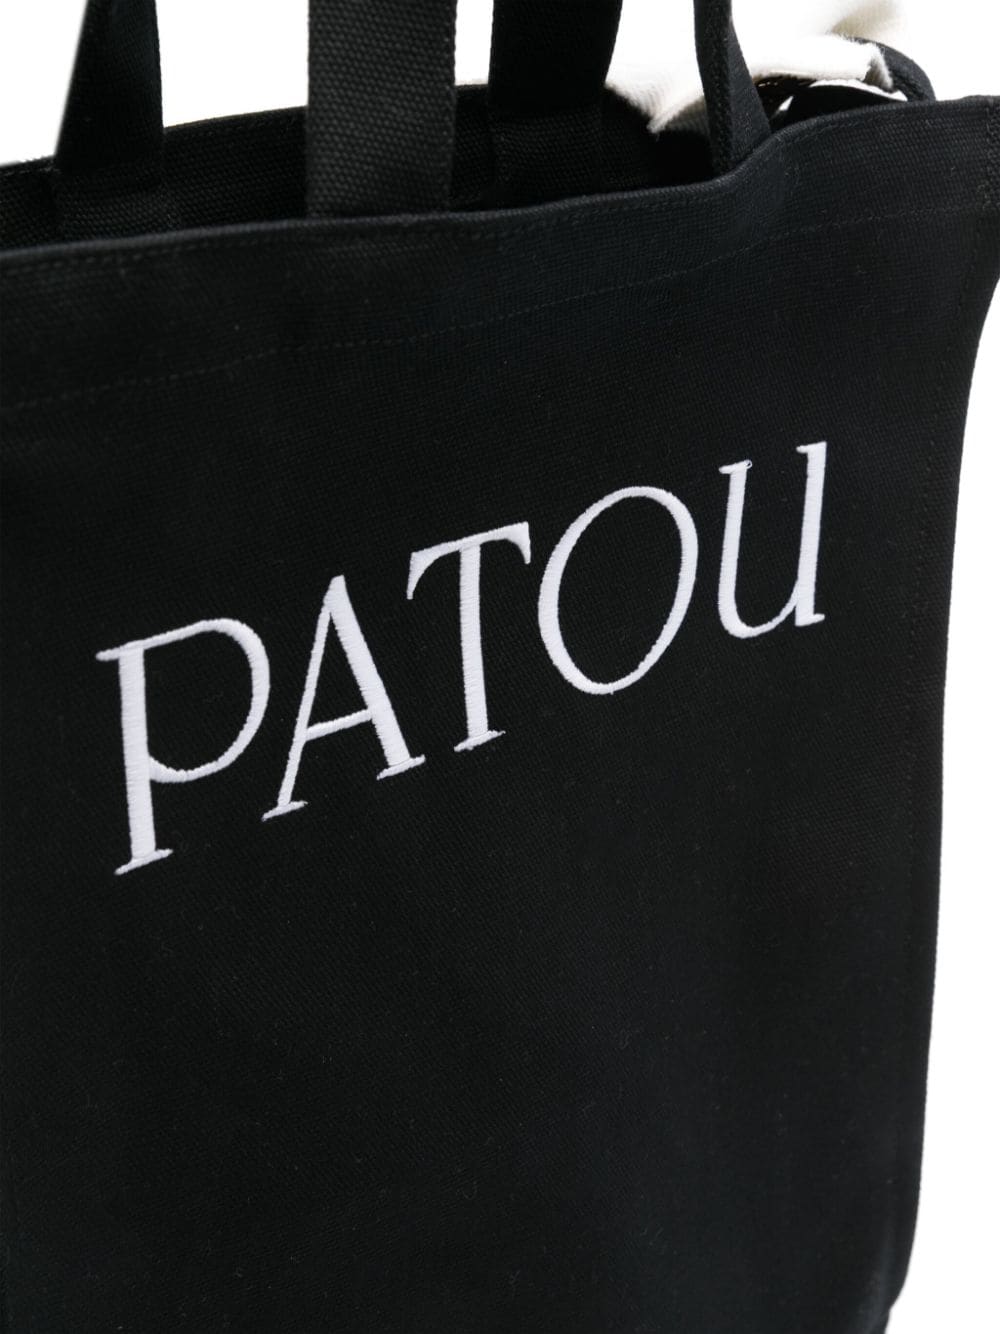 Patou PATOU- Shoulder Bag With Logo